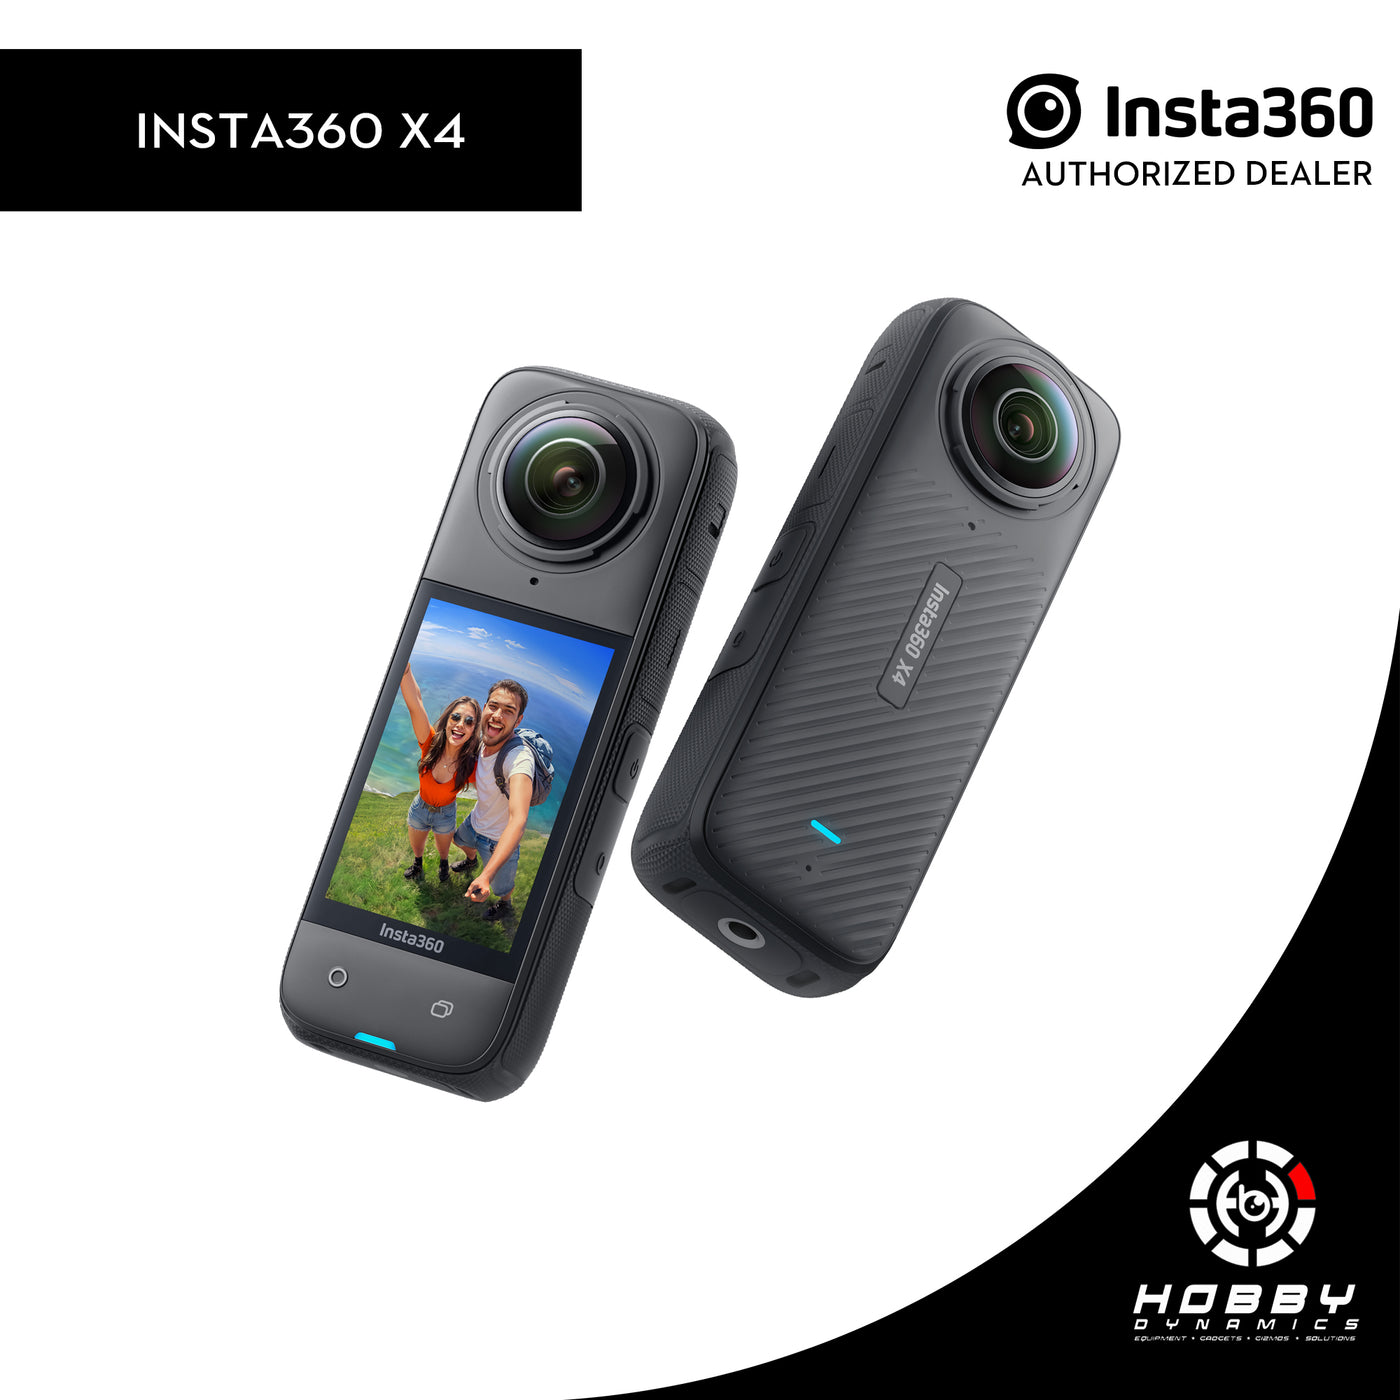 Insta360 X4 360 Action Camera